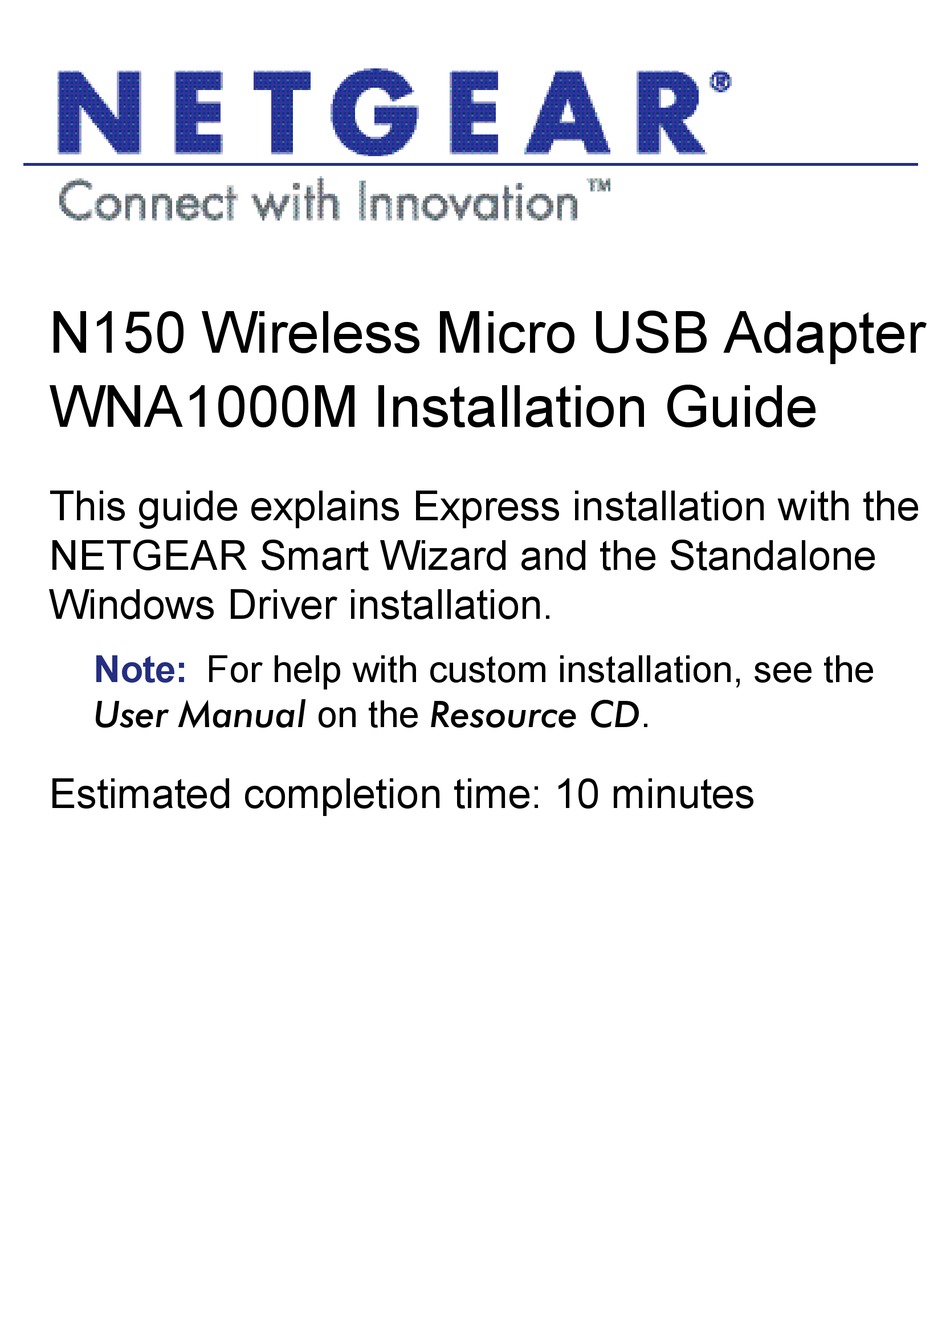 netgear n150 wireless usb adapter manual